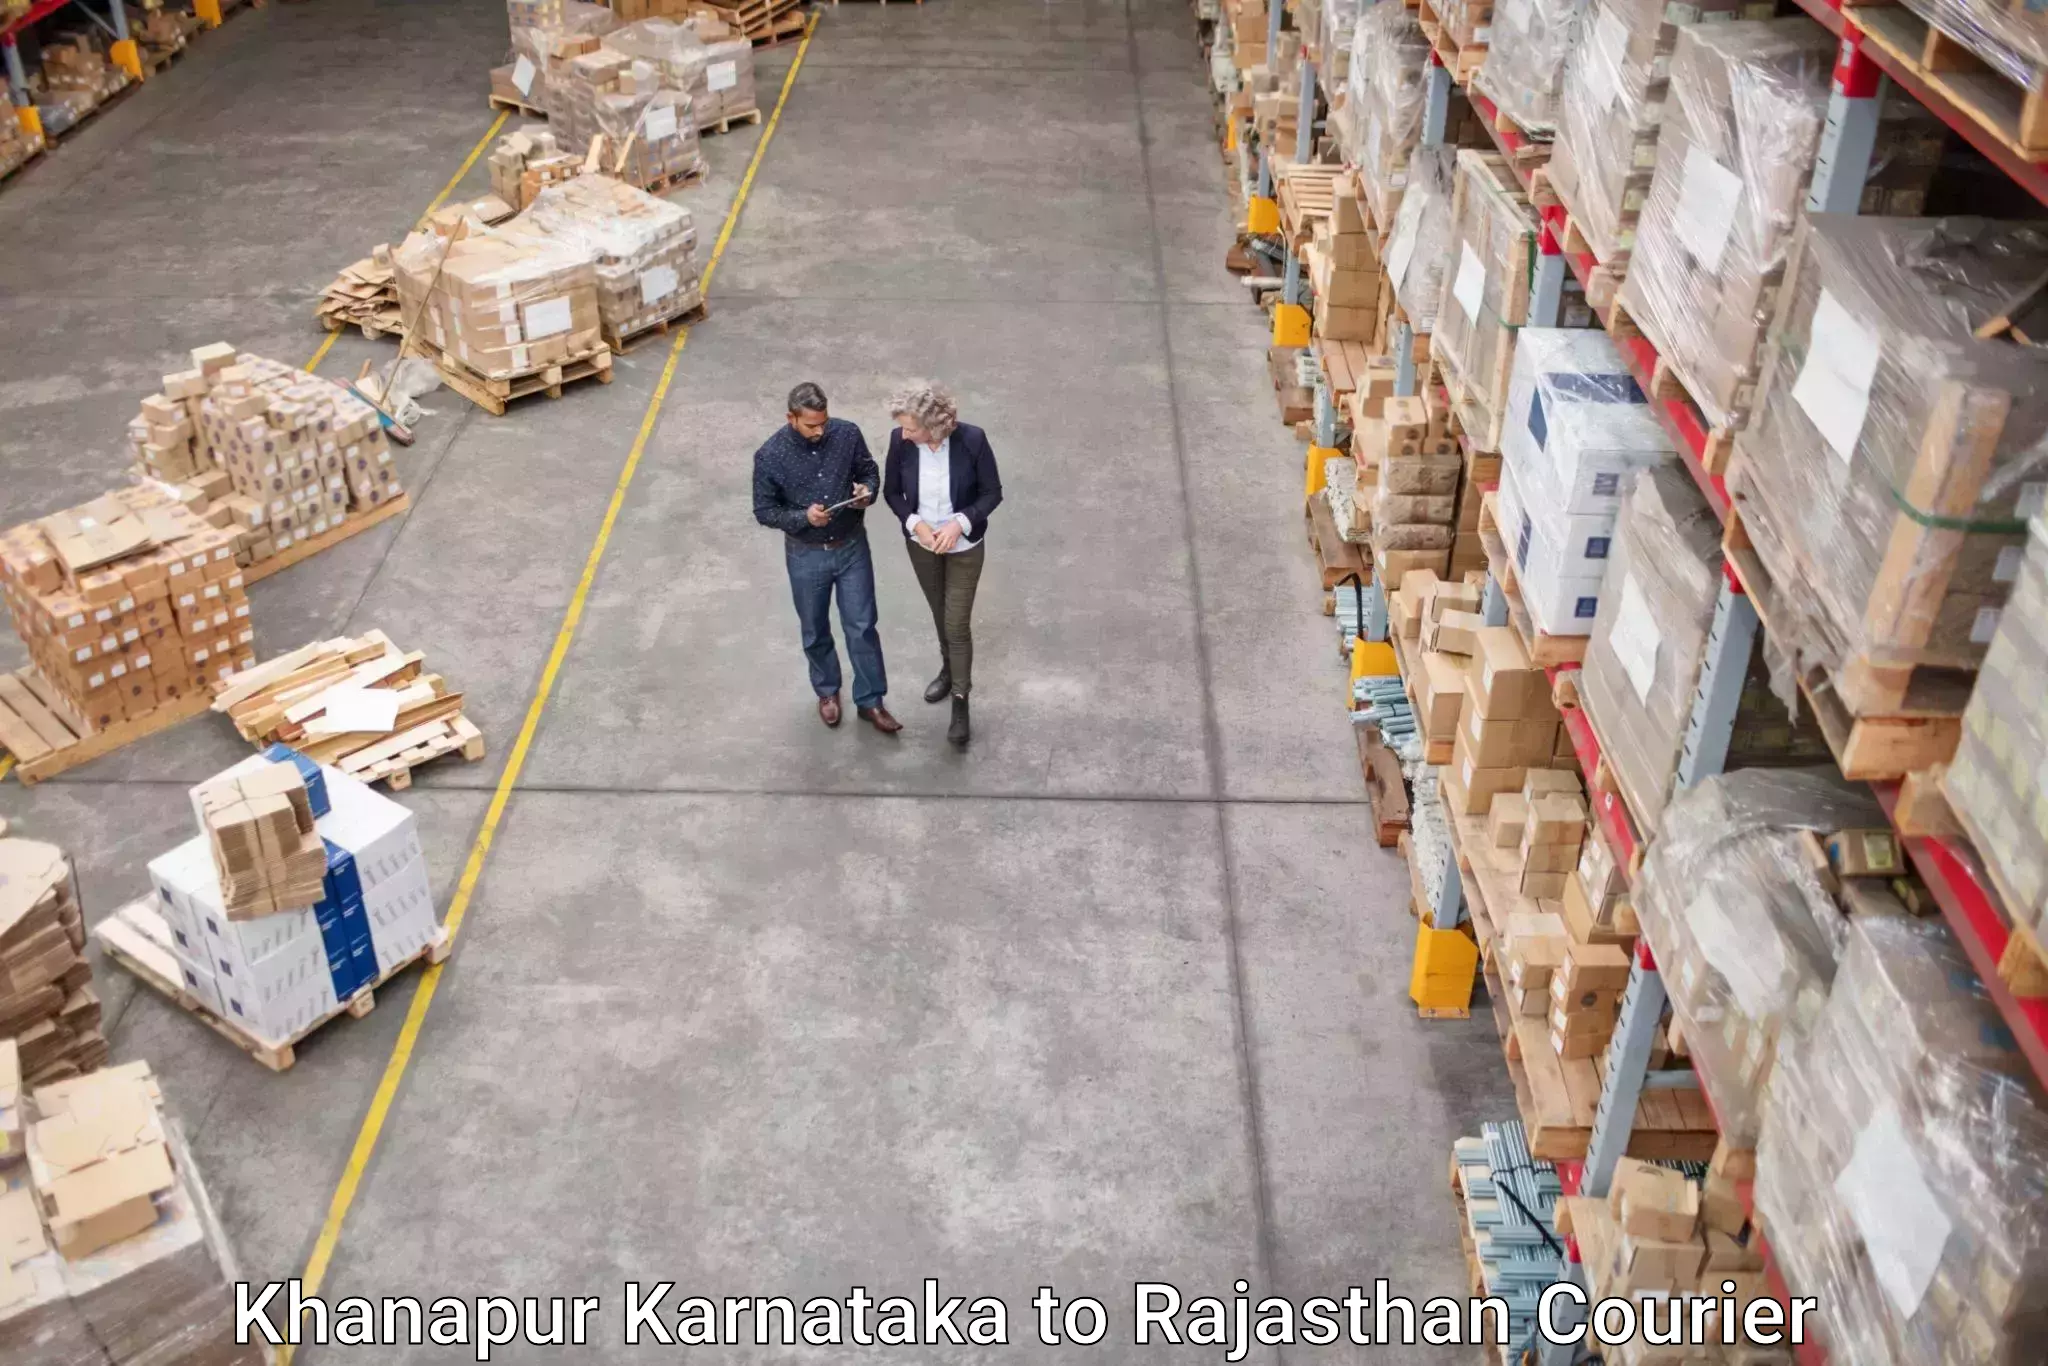 High-priority parcel service Khanapur Karnataka to Neemrana